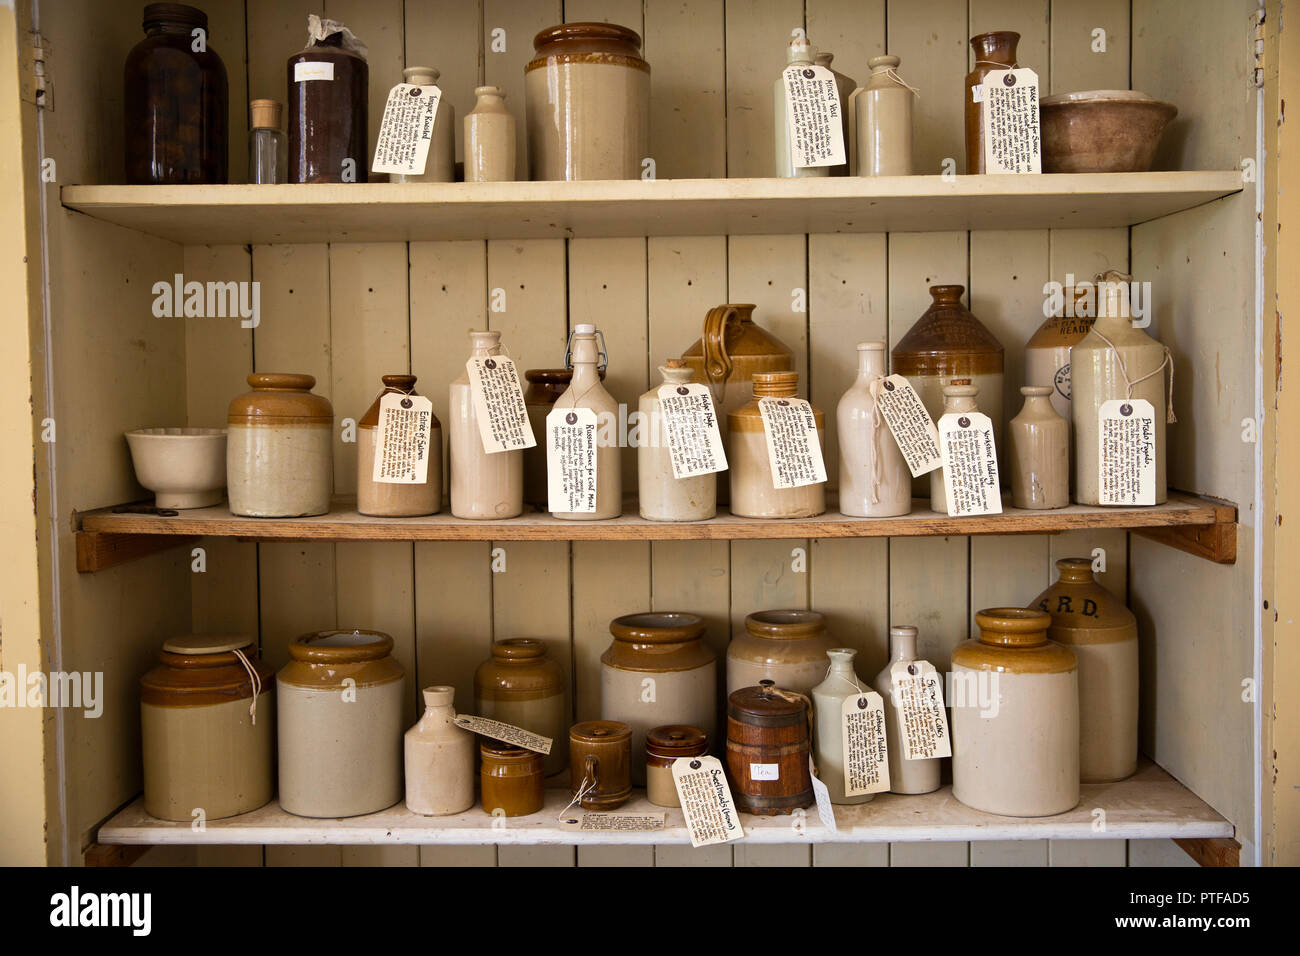 England, Berkshire,  Lower Basildon, Basildon Park Old Kitchen, labelled old stonewars jars, jugs and bottles on shelf Stock Photo